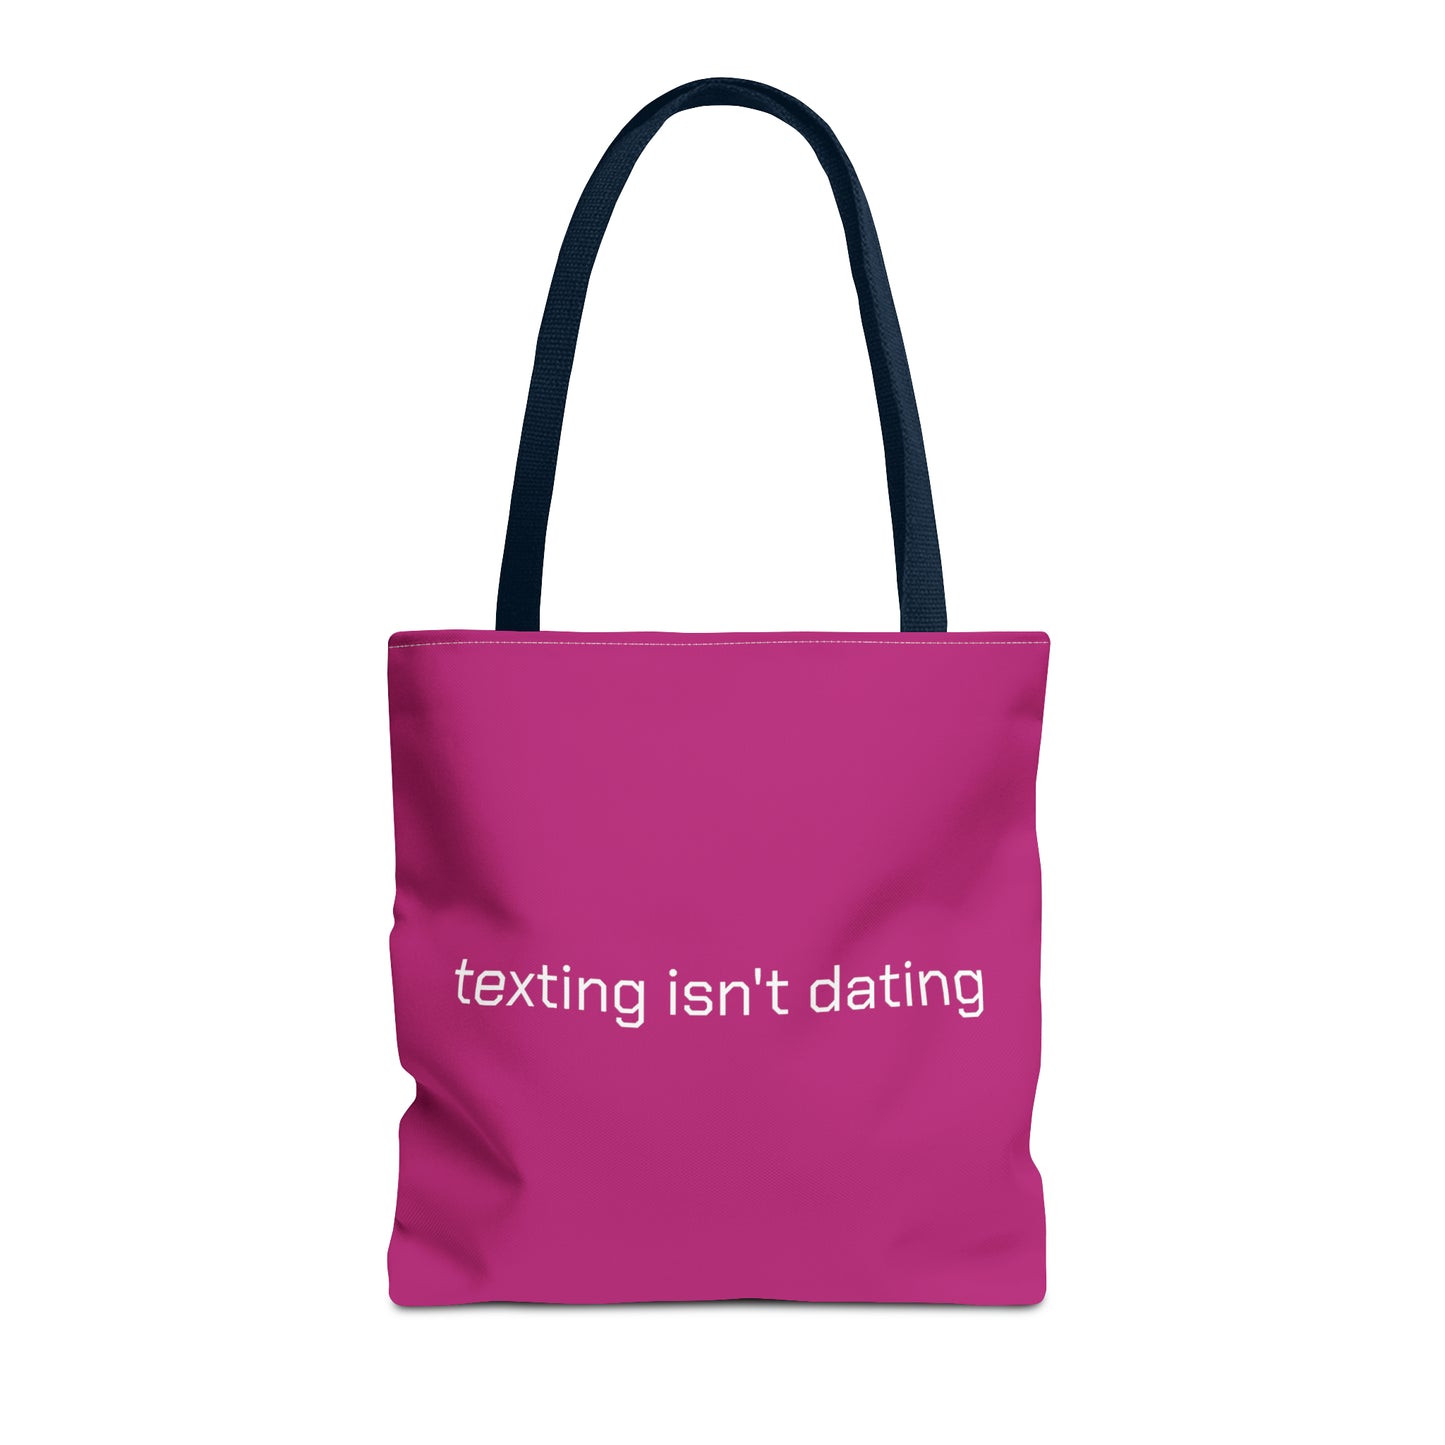 texting isn't dating Tote Bag